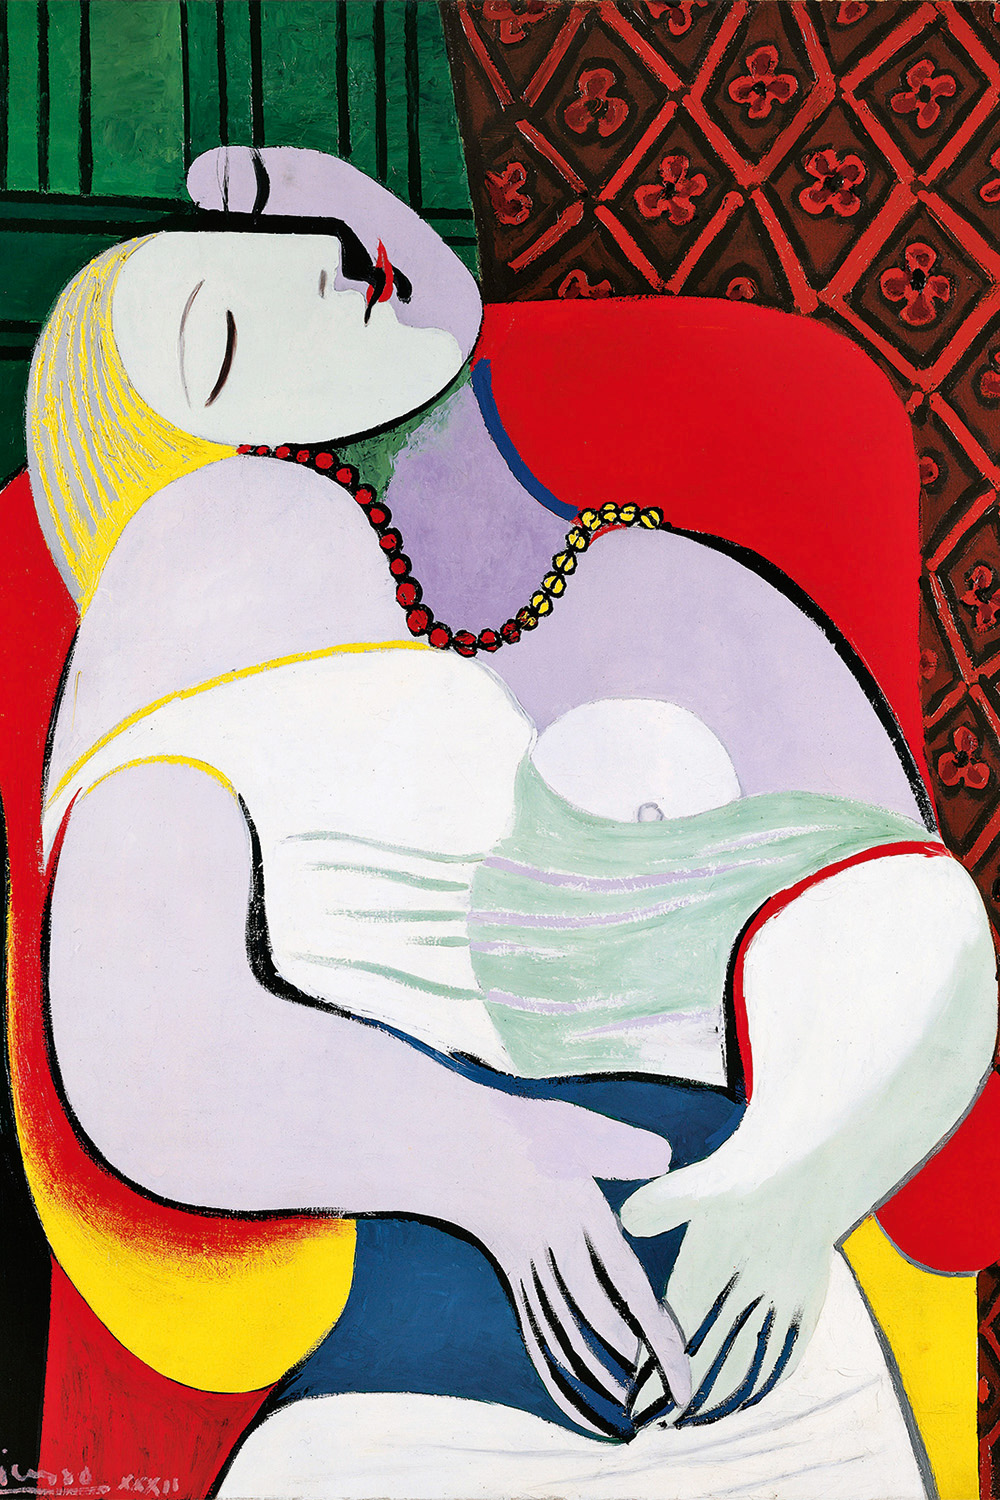 REPOUSO - O Sonho, de Picasso: retrato sereno da amante no universo onírico -